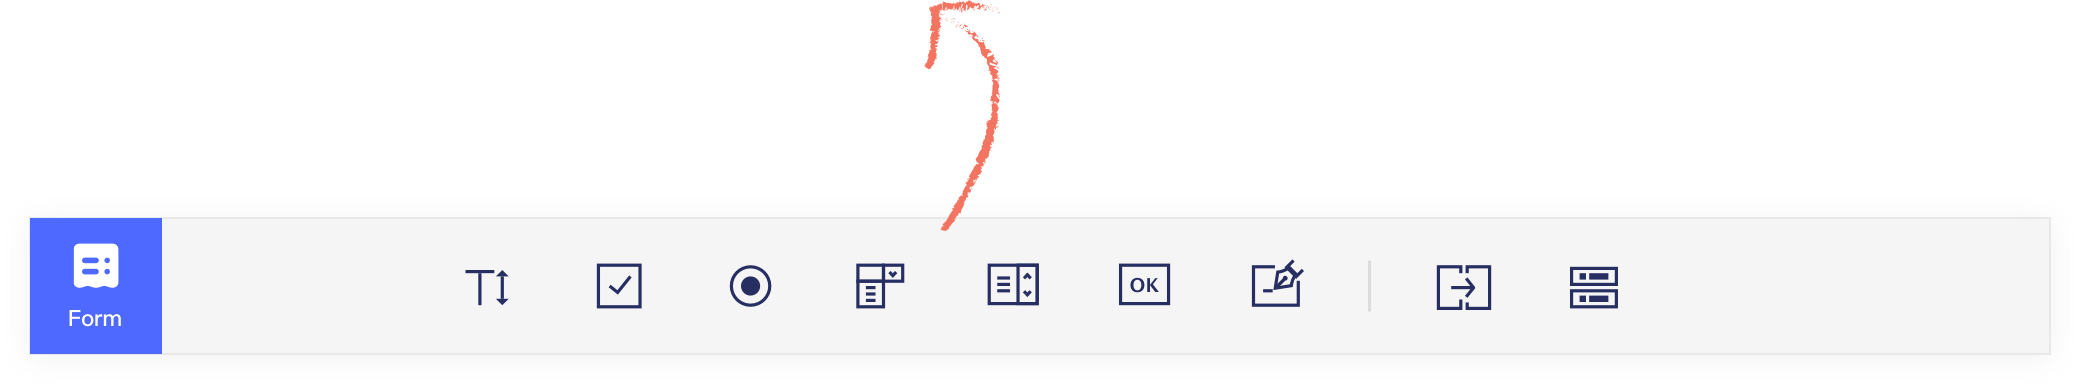 pdf form icon